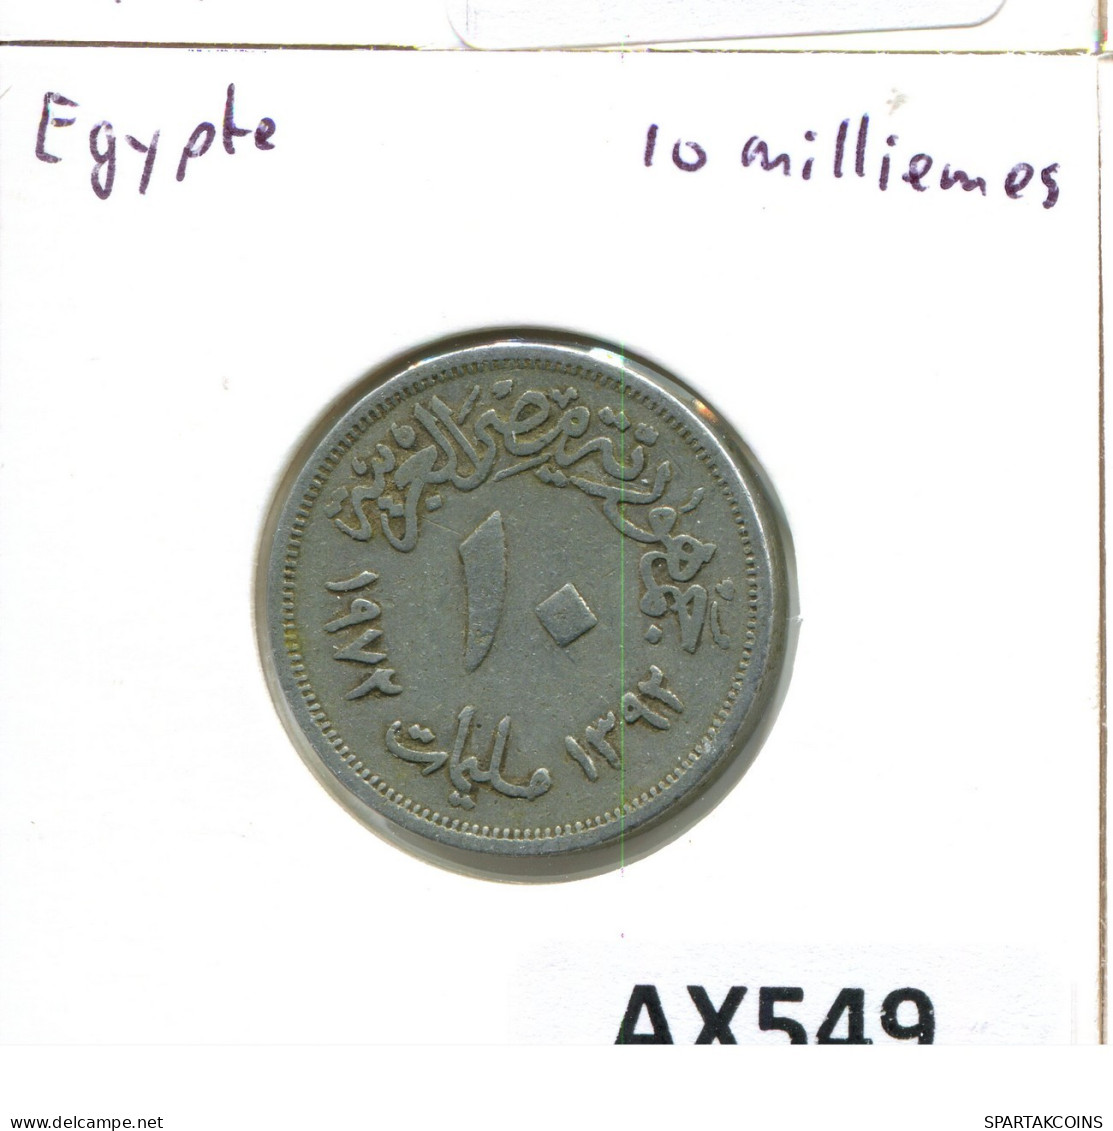 10 MILLIEMES 1976 EGIPTO EGYPT Islámico Moneda #AX549.E.A - Egipto